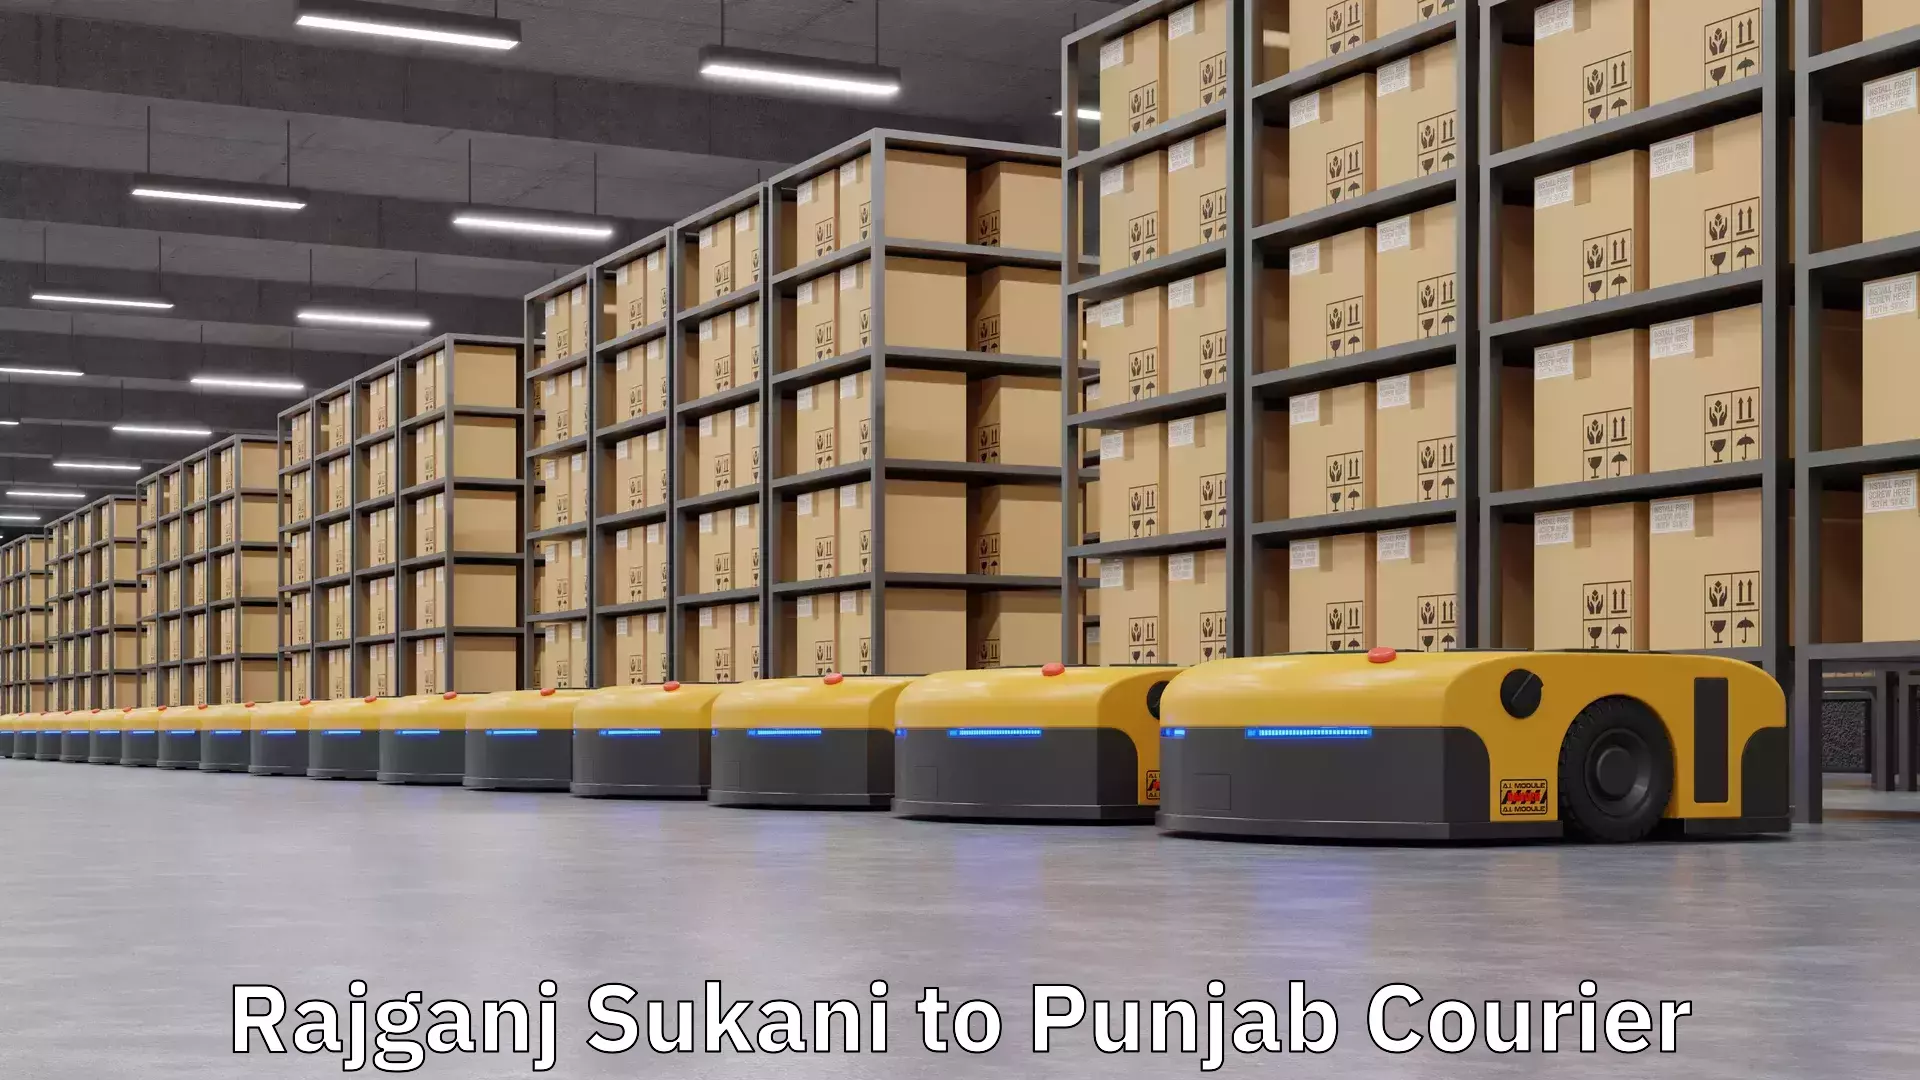 Advanced courier platforms Rajganj Sukani to Punjab